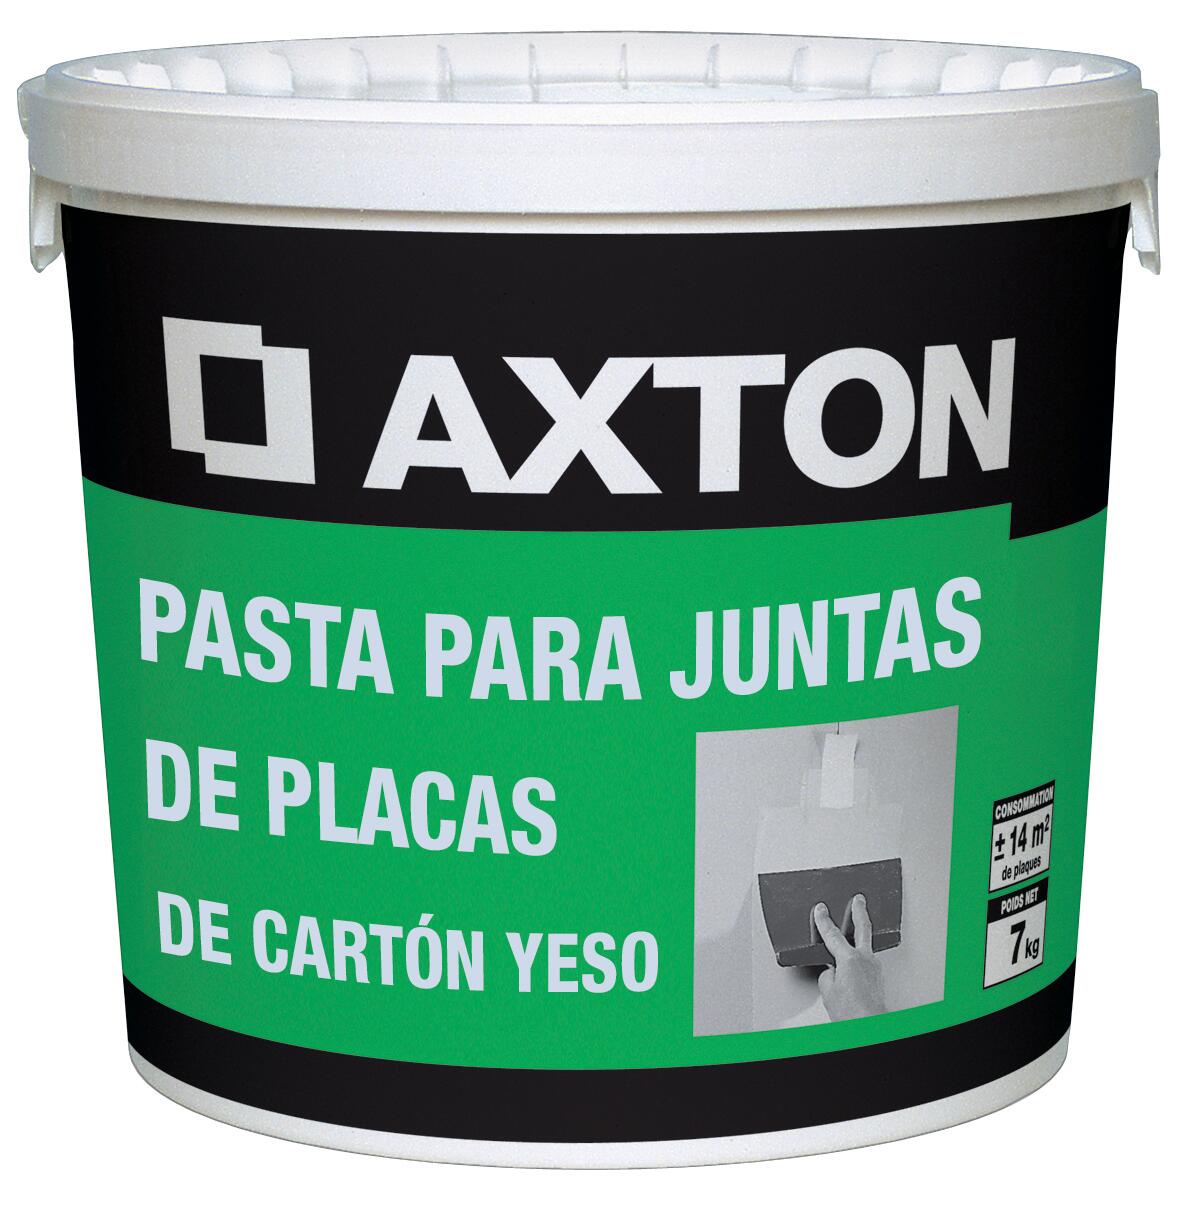 Plaste cubregotelé en polvo AXTON 15 kg